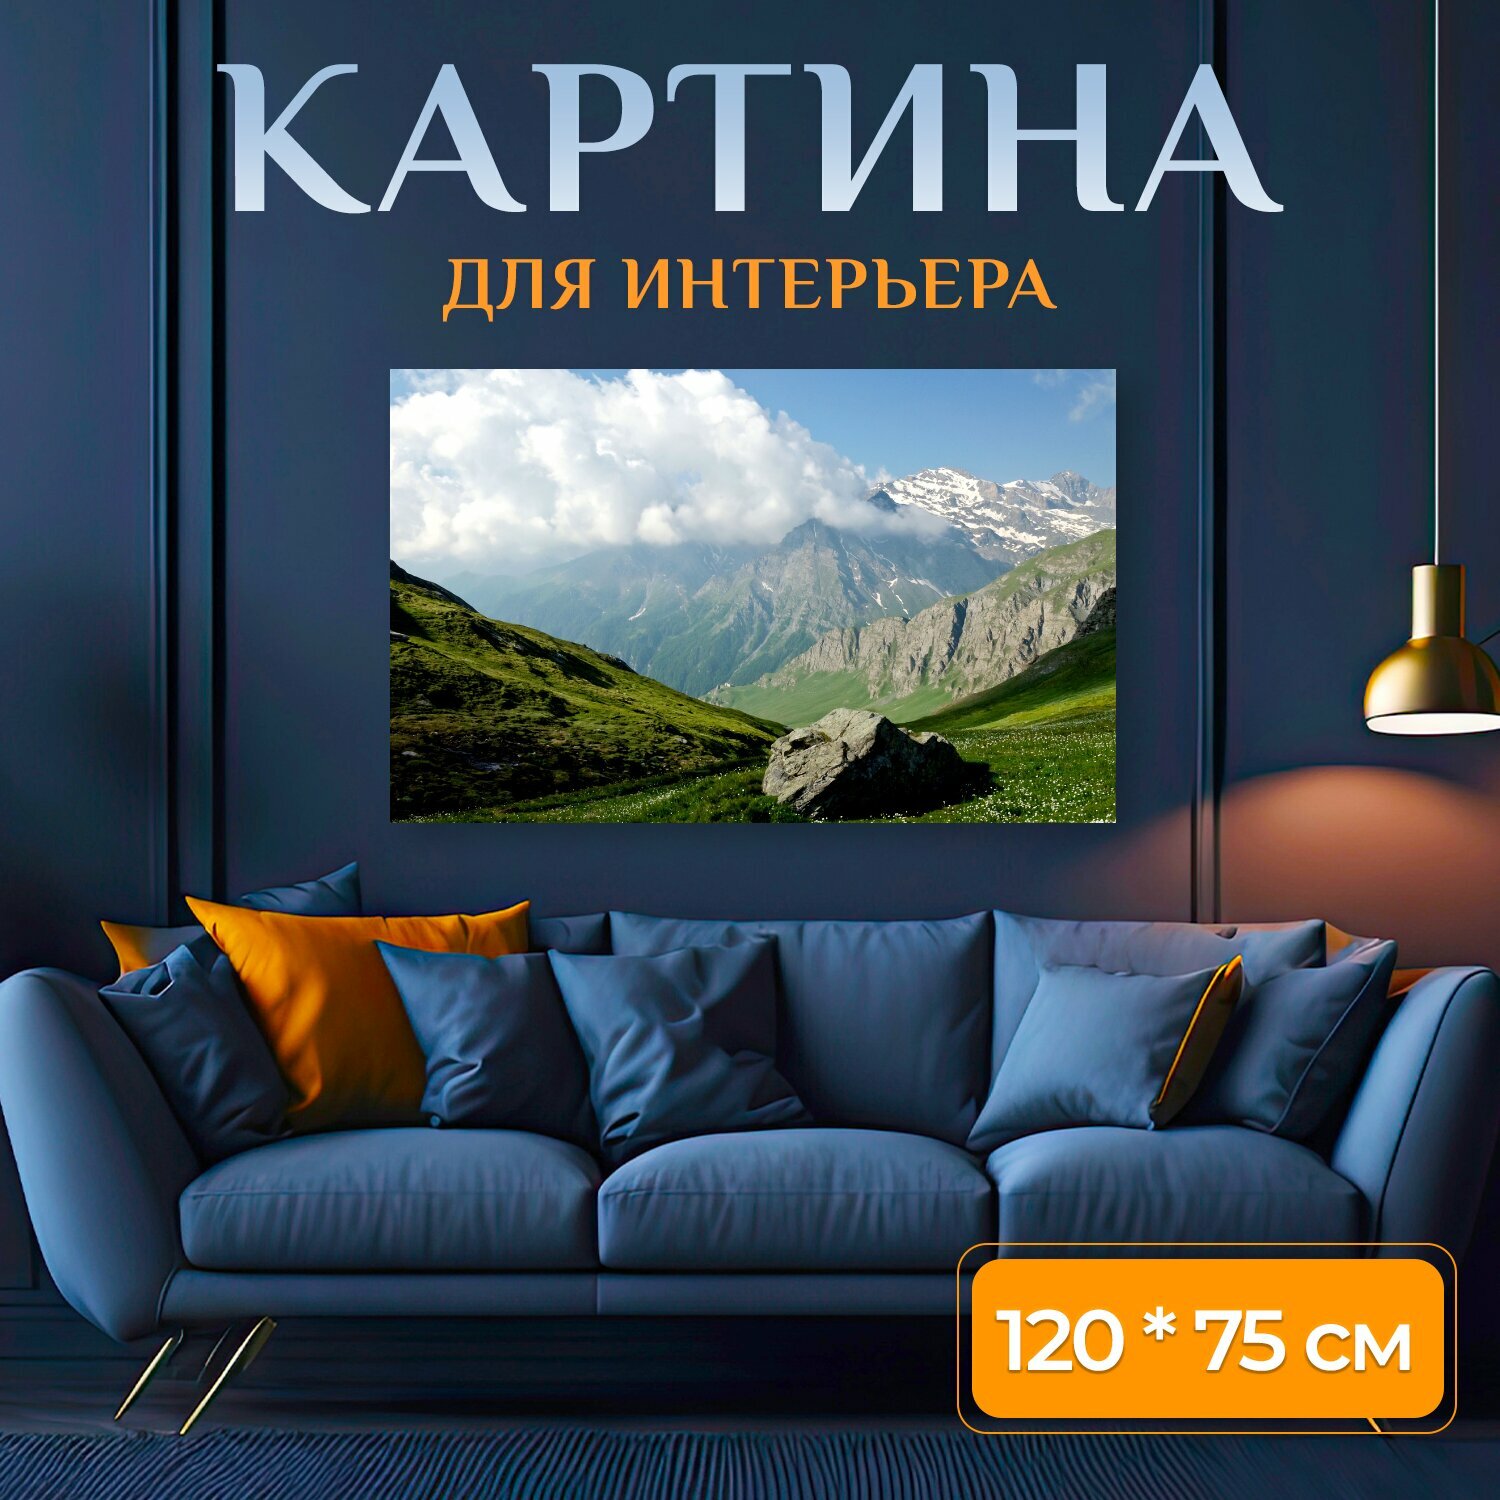 Картина на холсте "Гора, небо, природа" на подрамнике 120х75 см. для интерьера